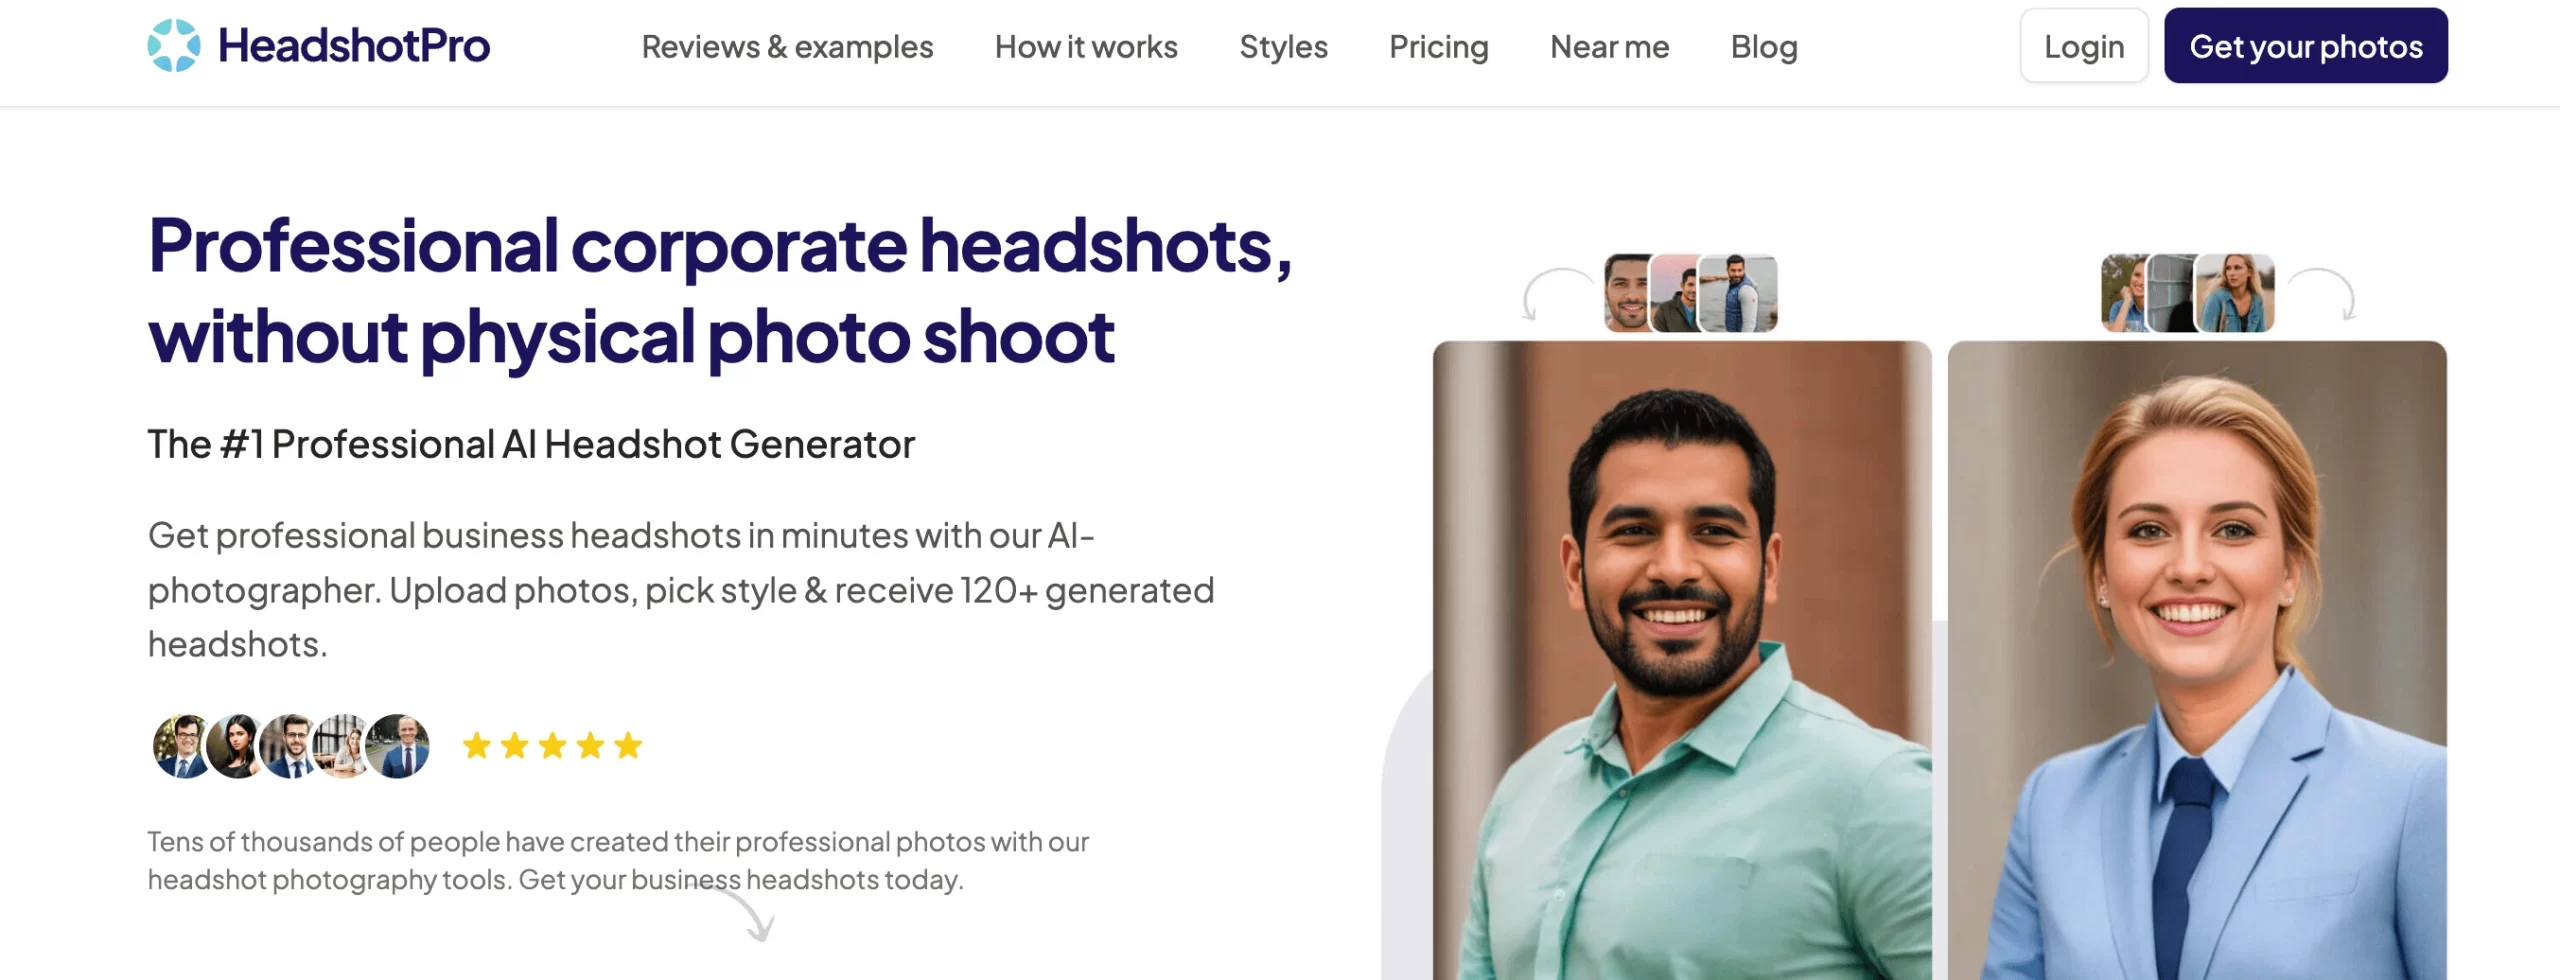 HeadshotPro's website home page